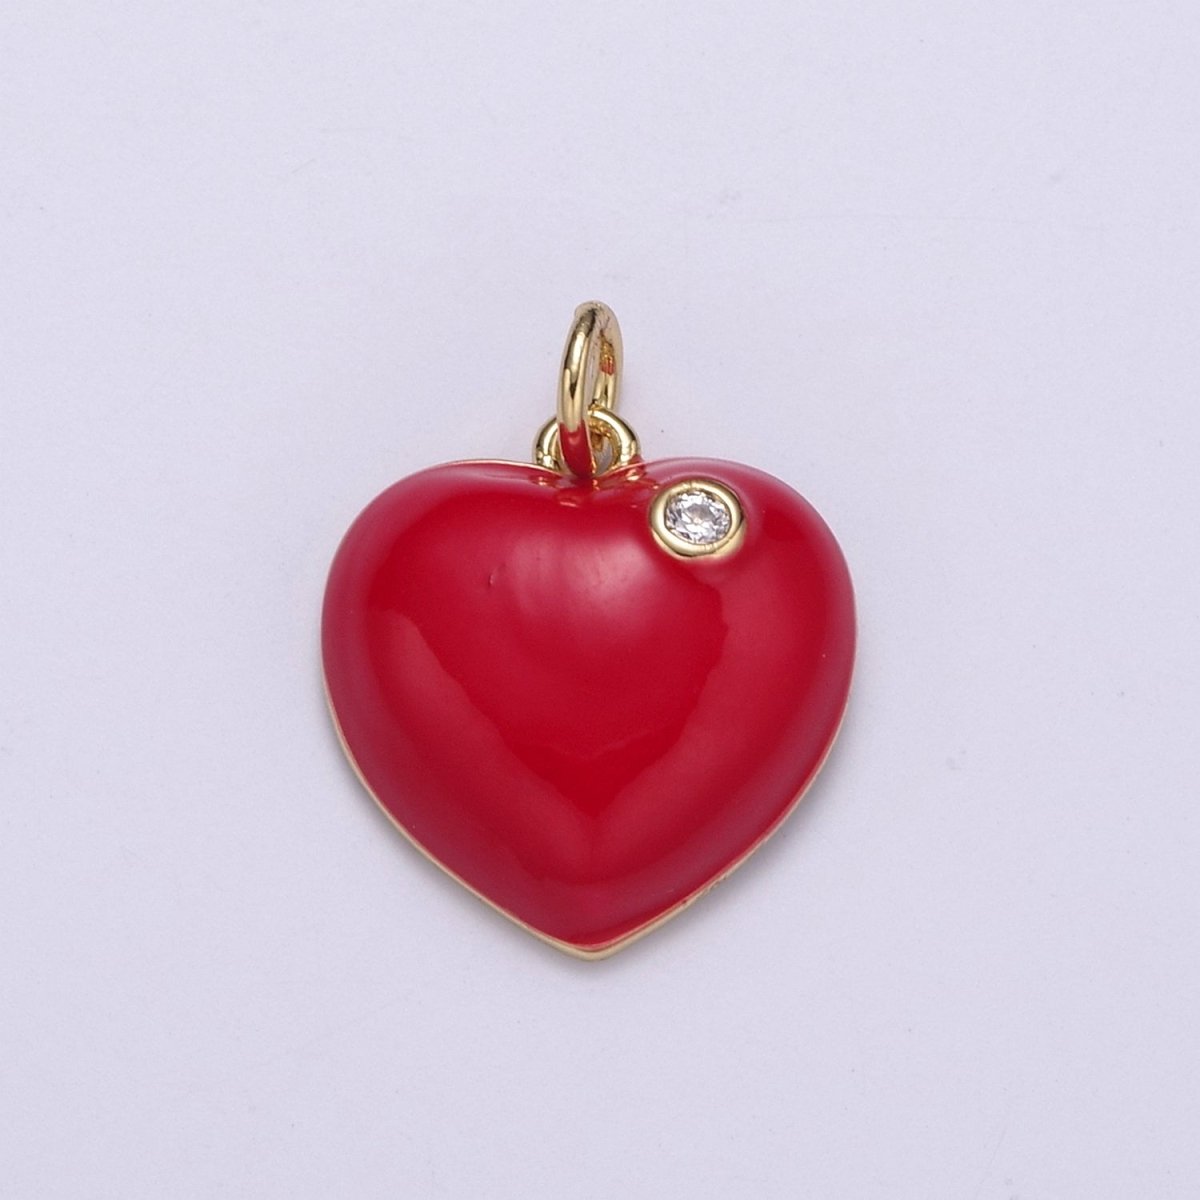 Mini Enamel Heart Charm in Green, Black, Pink, Red Enamel Charms, 14K Gold Filled Heart Charm Colorful N-222 - N-225 - DLUXCA